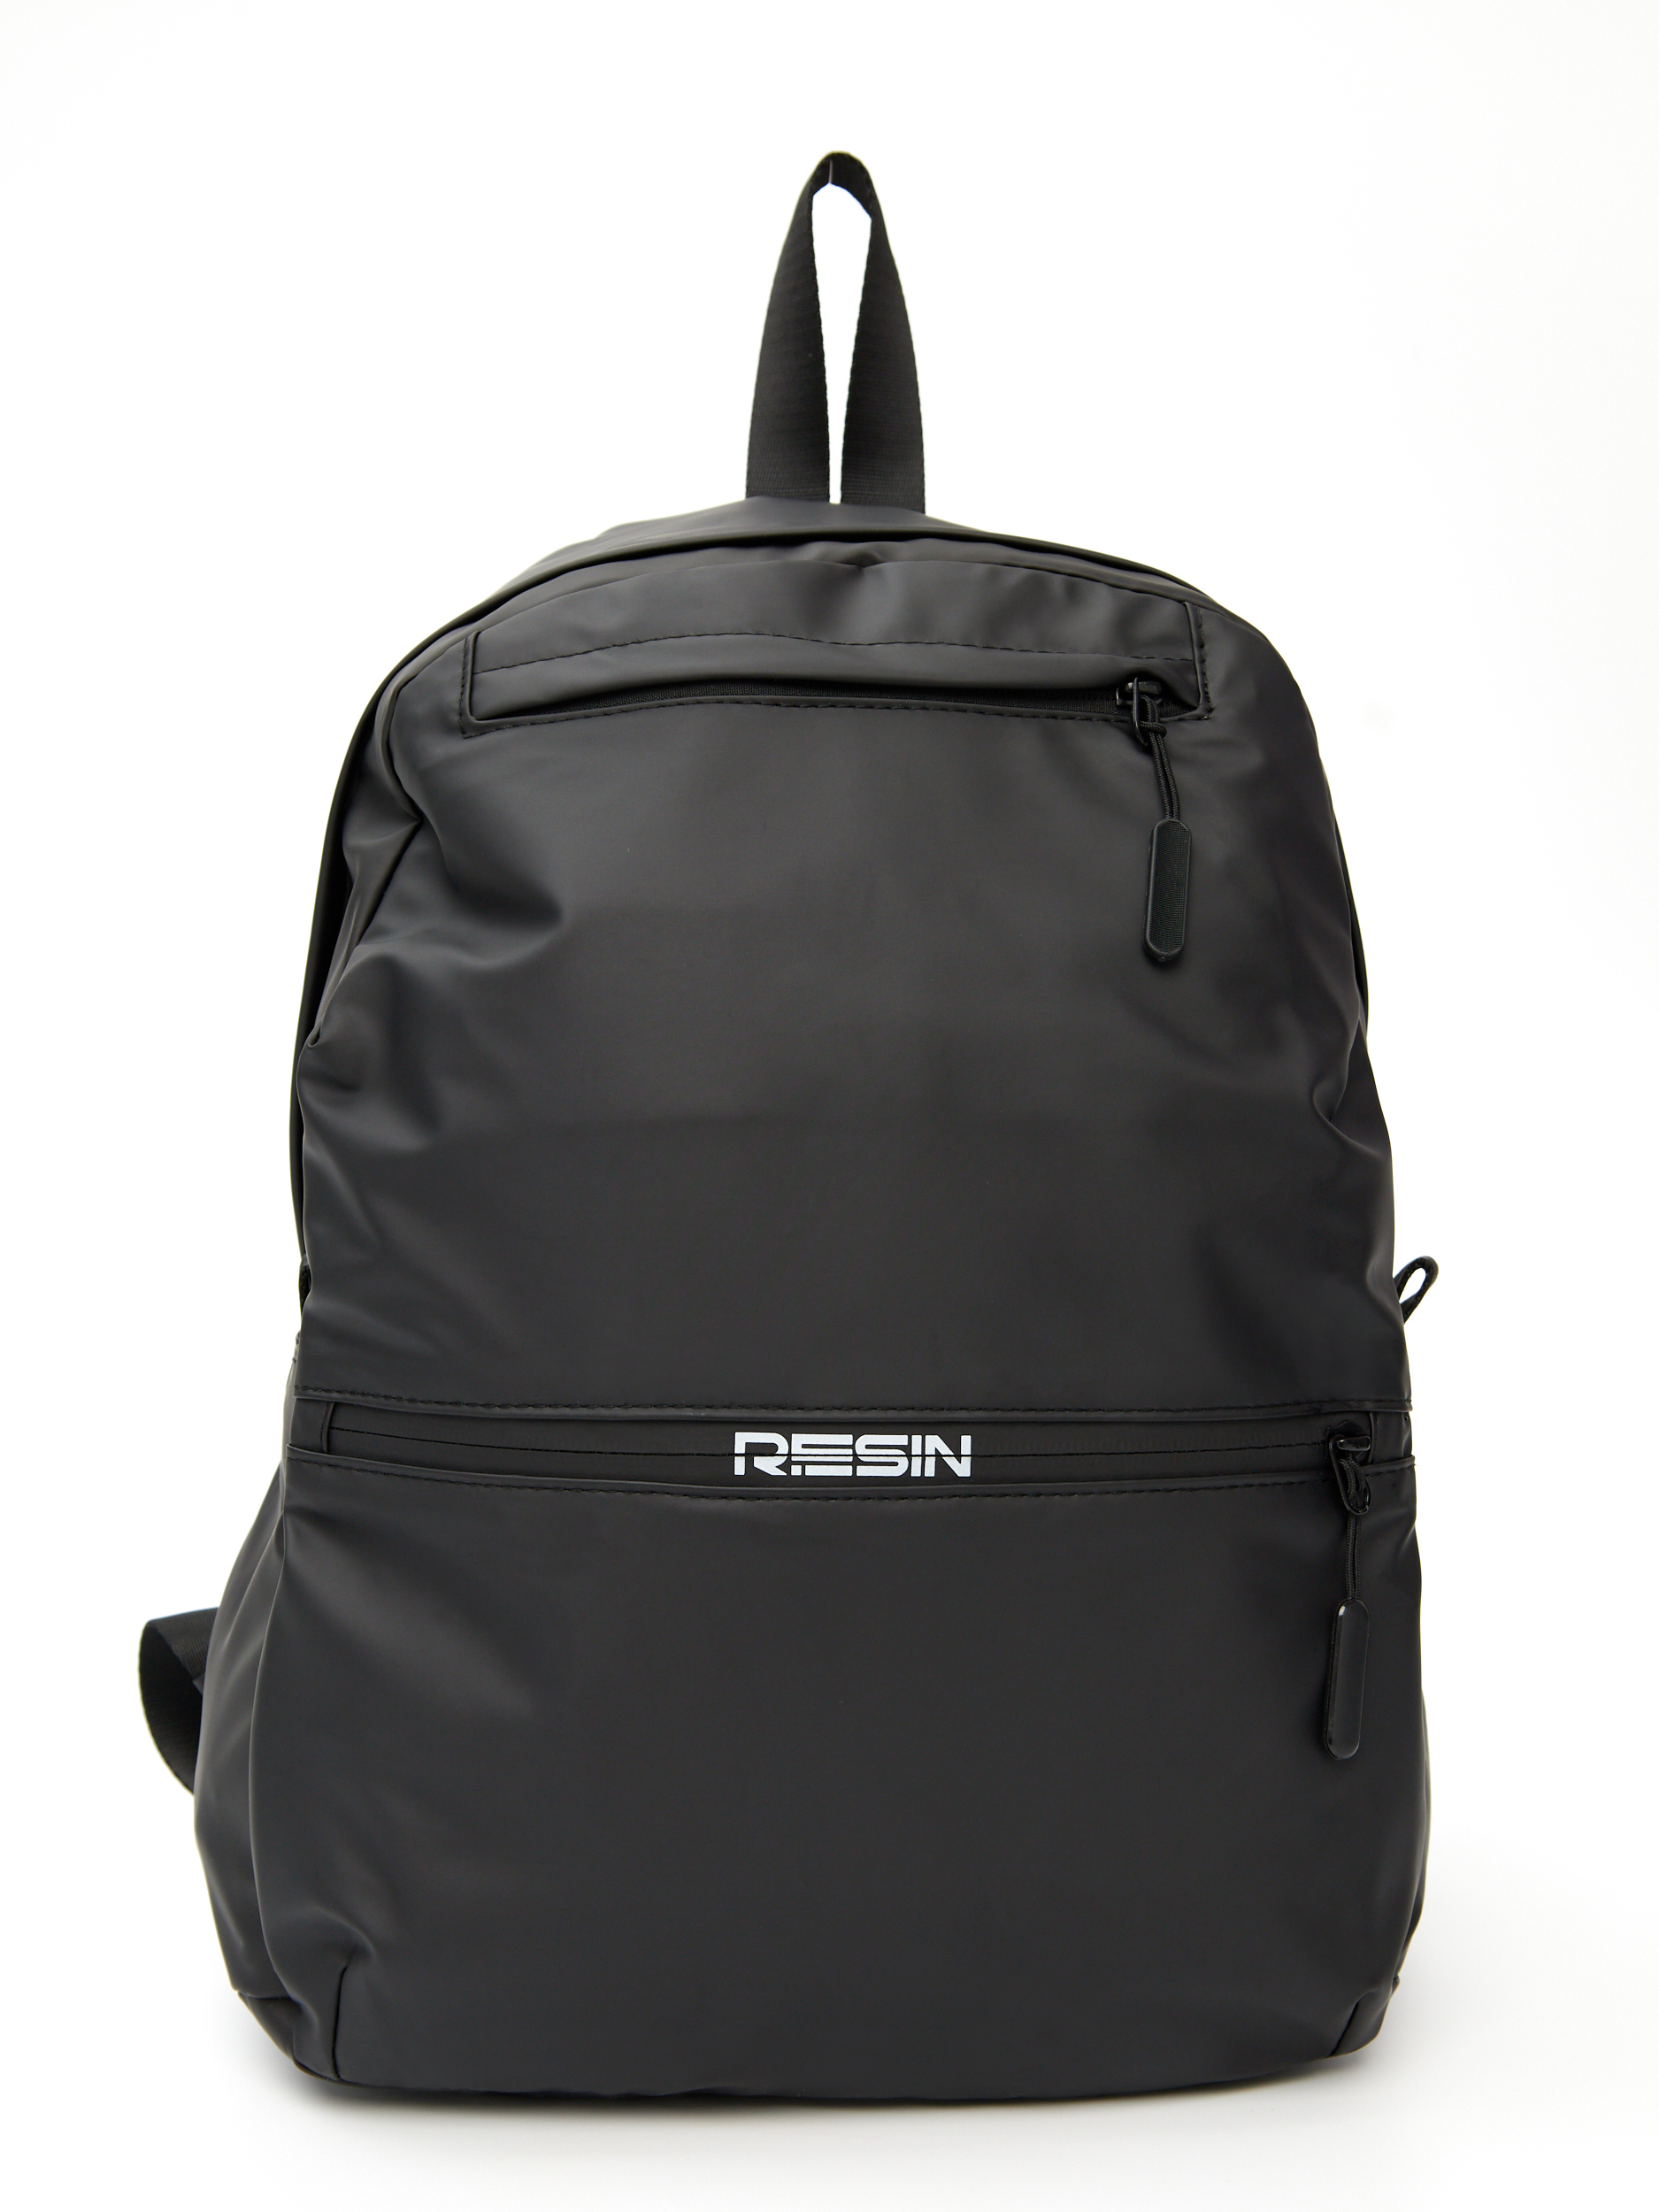 Рюкзак унисекс RESIN camuf черный, 48х39х6 см